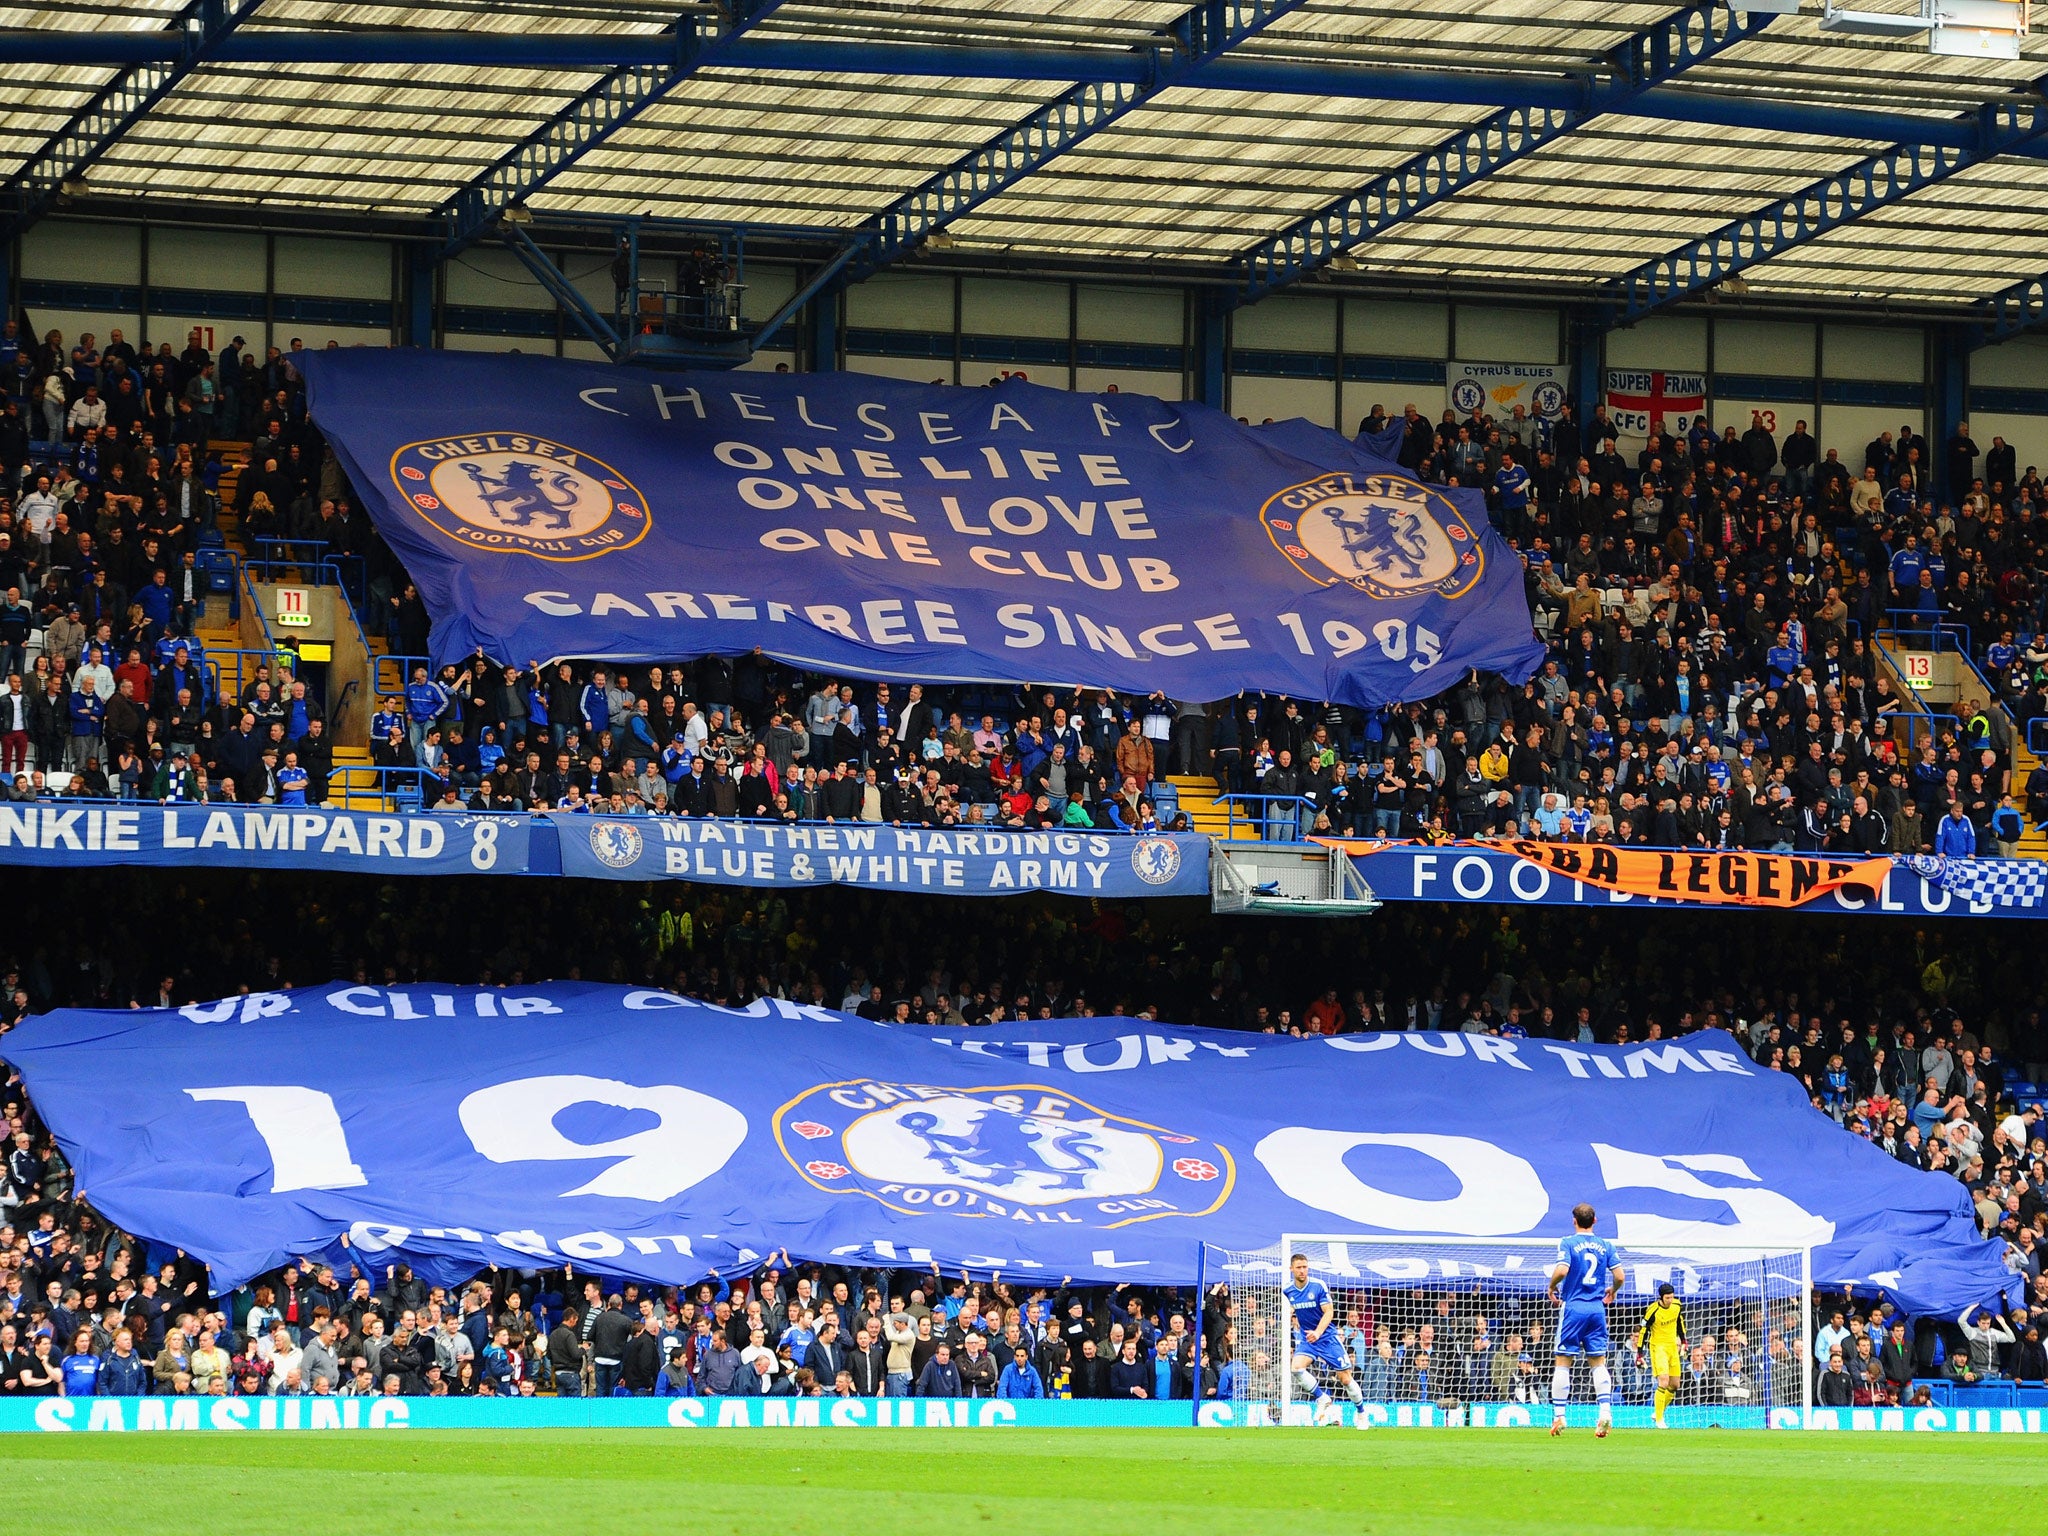 A Chelsea fan display at Stamford Bridge